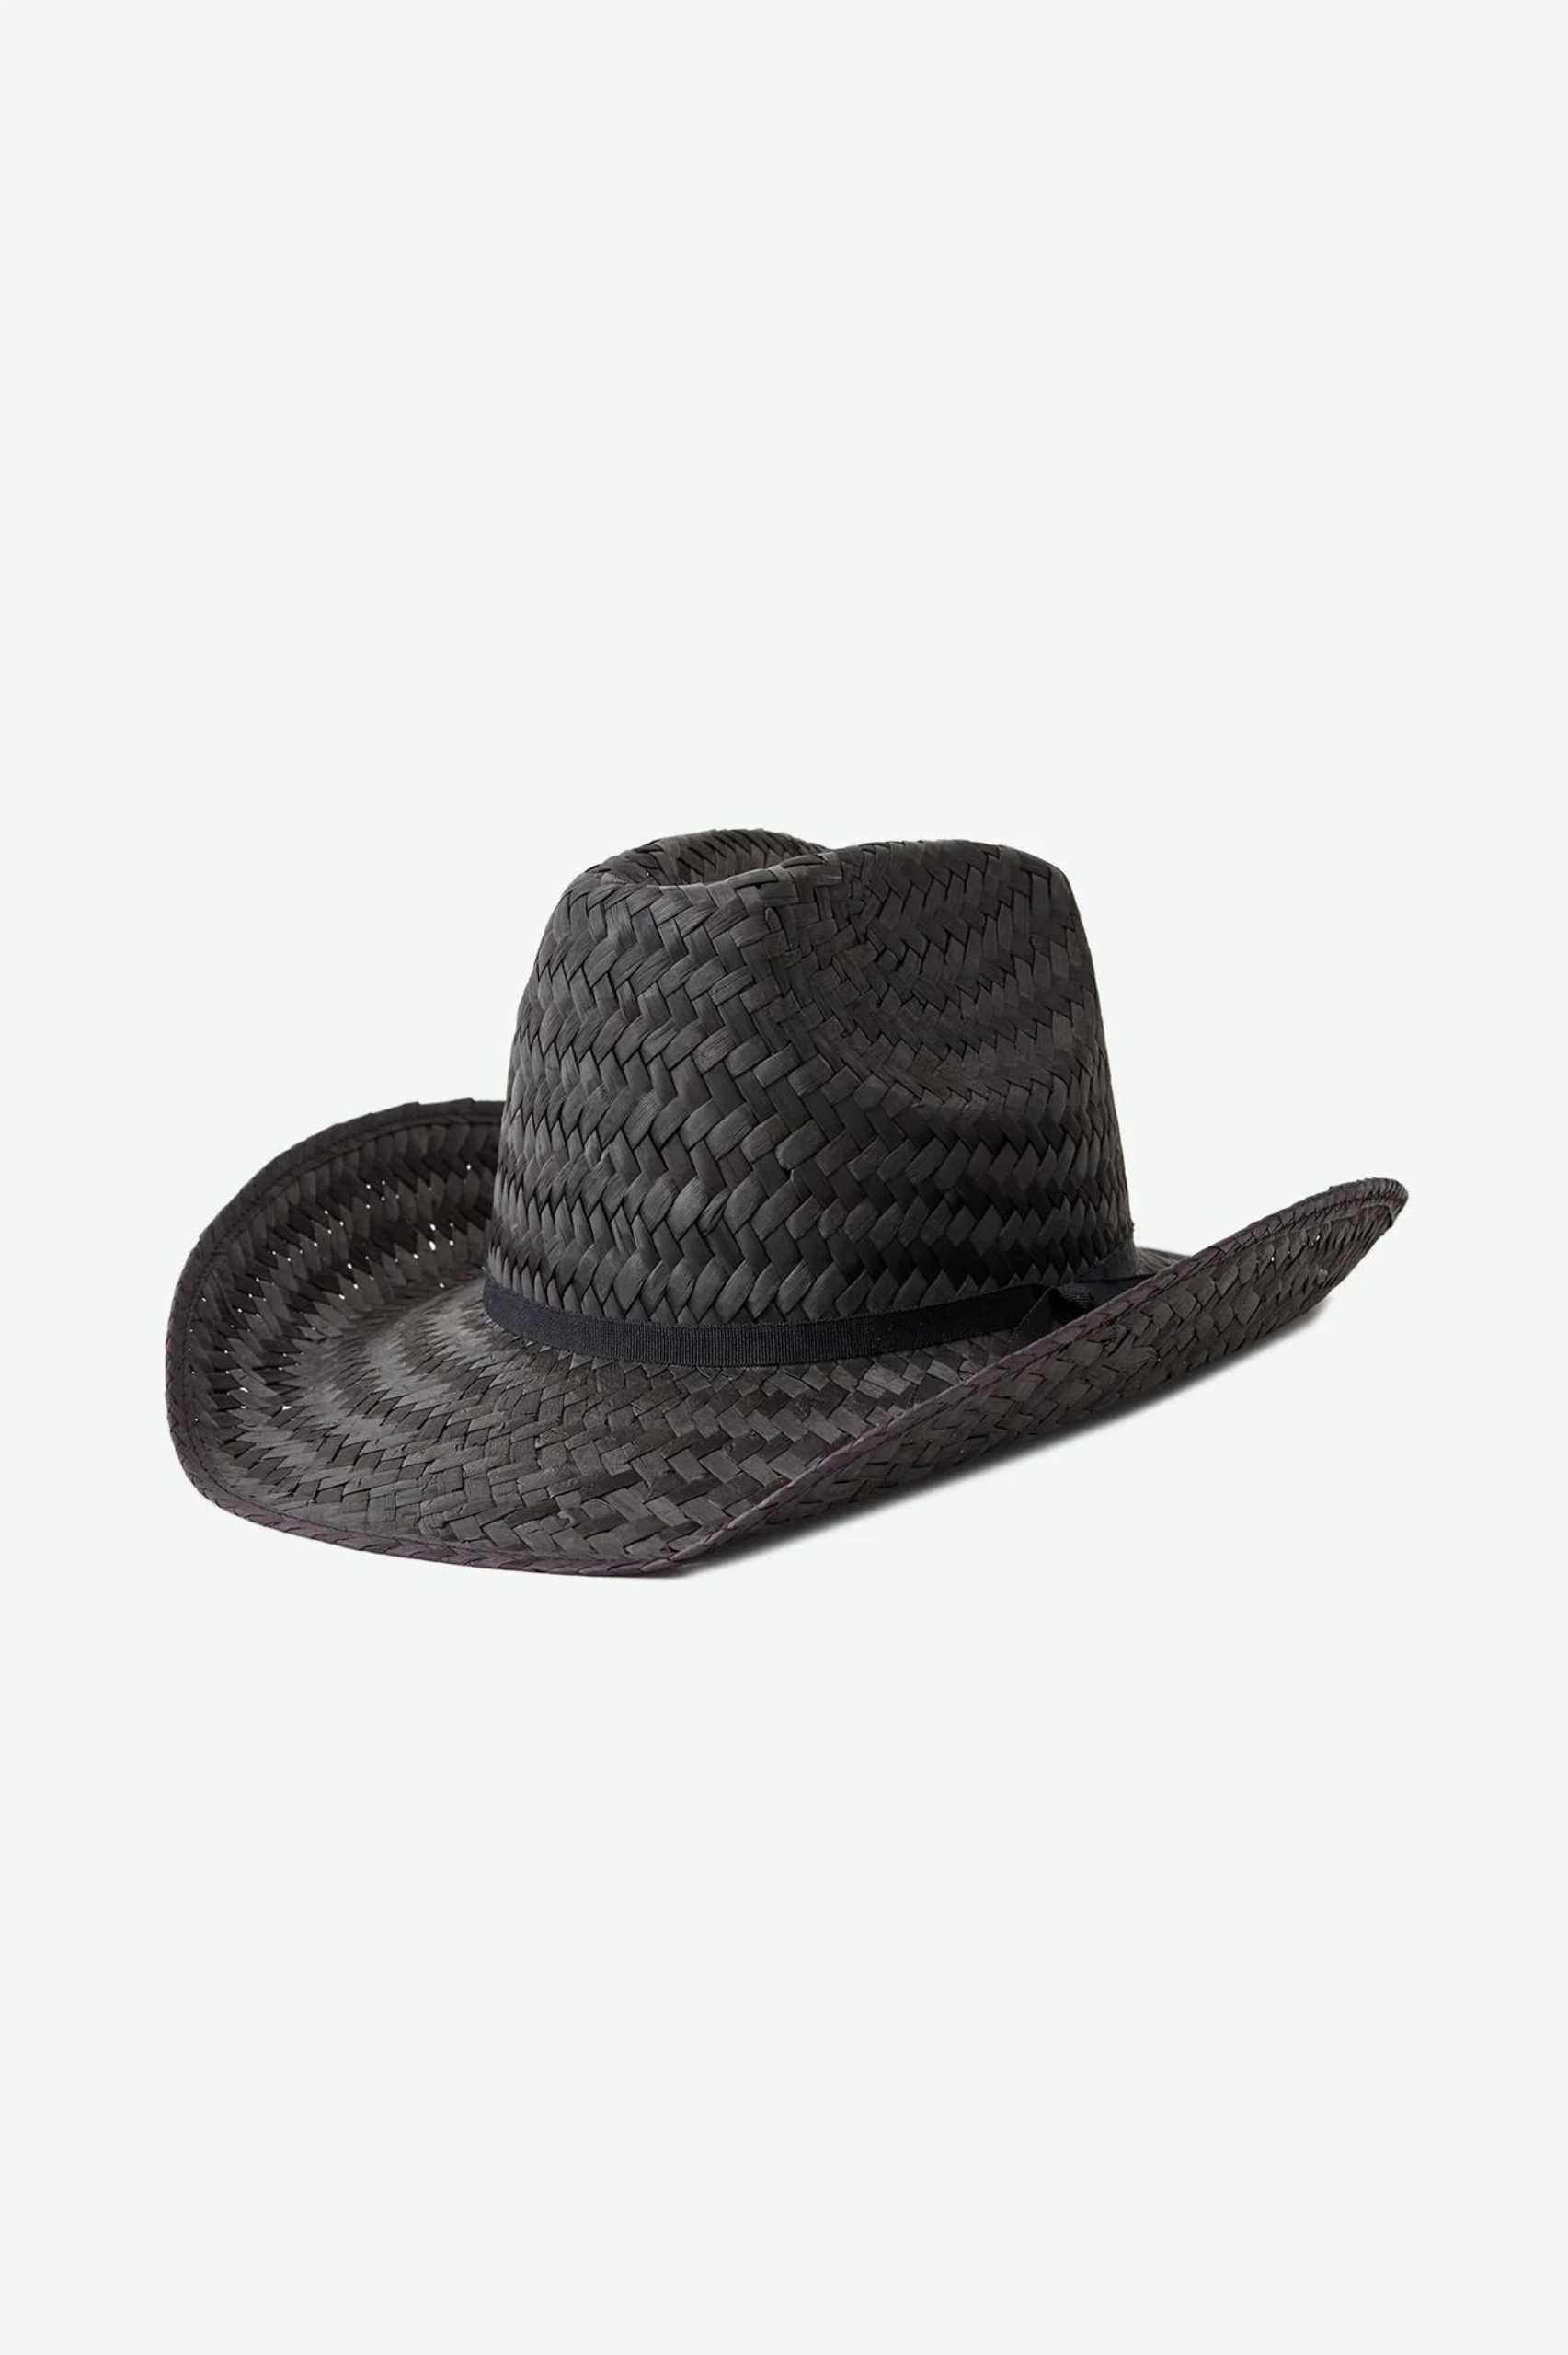 Brixton Unisex Houston Straw Cowboy Hat in Black